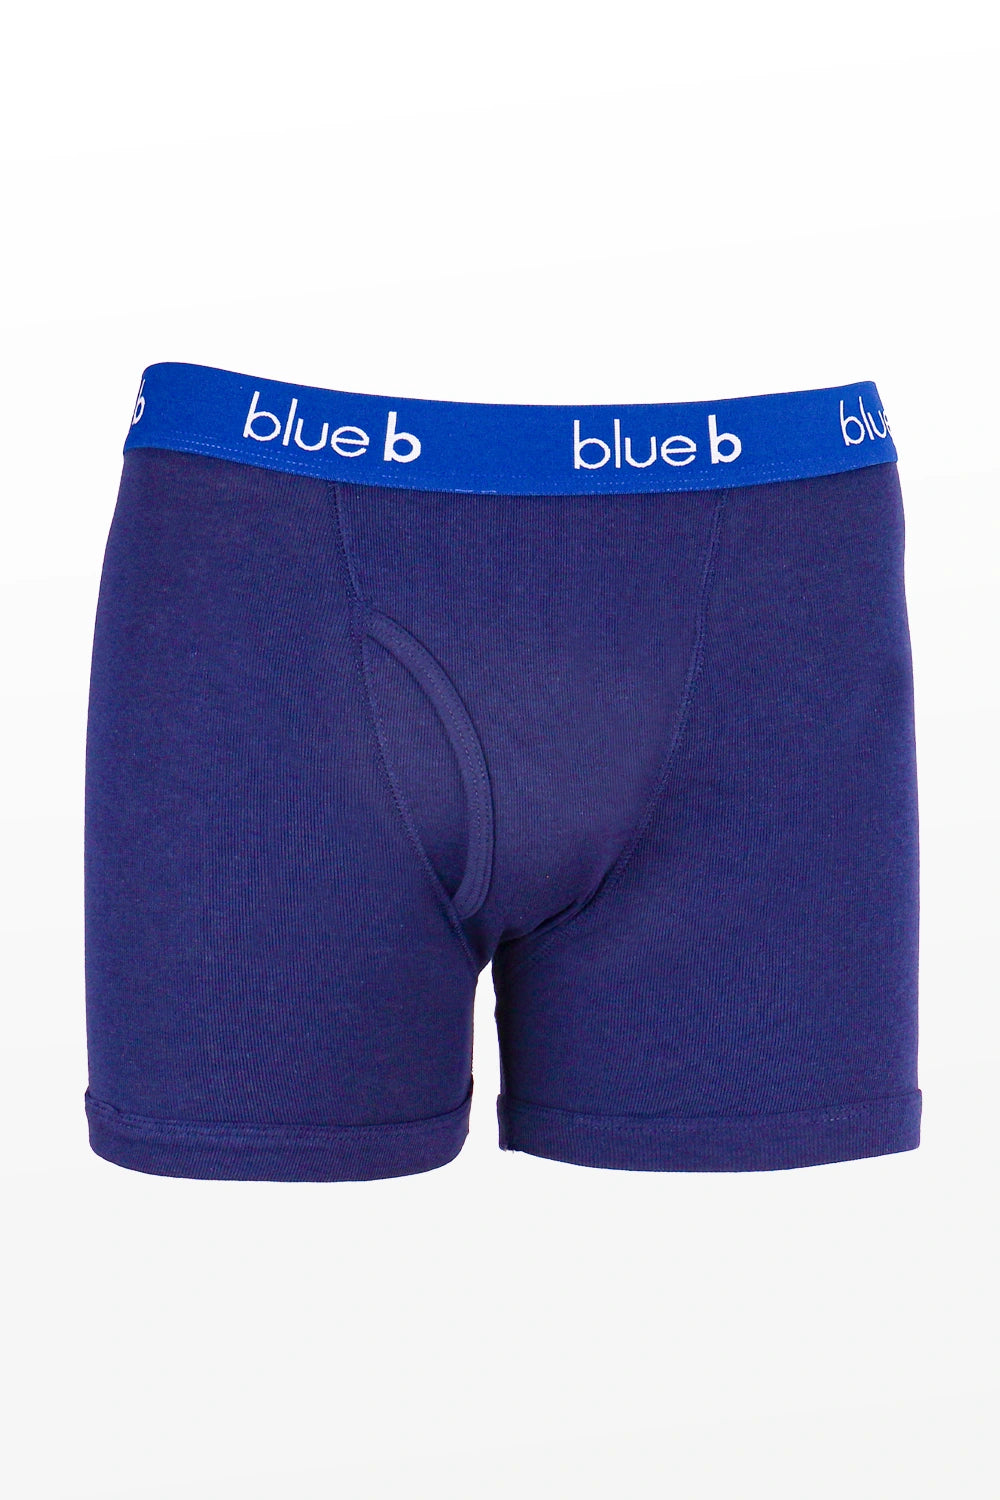 Blue B Apparel Men's Boxer Underwear Blue